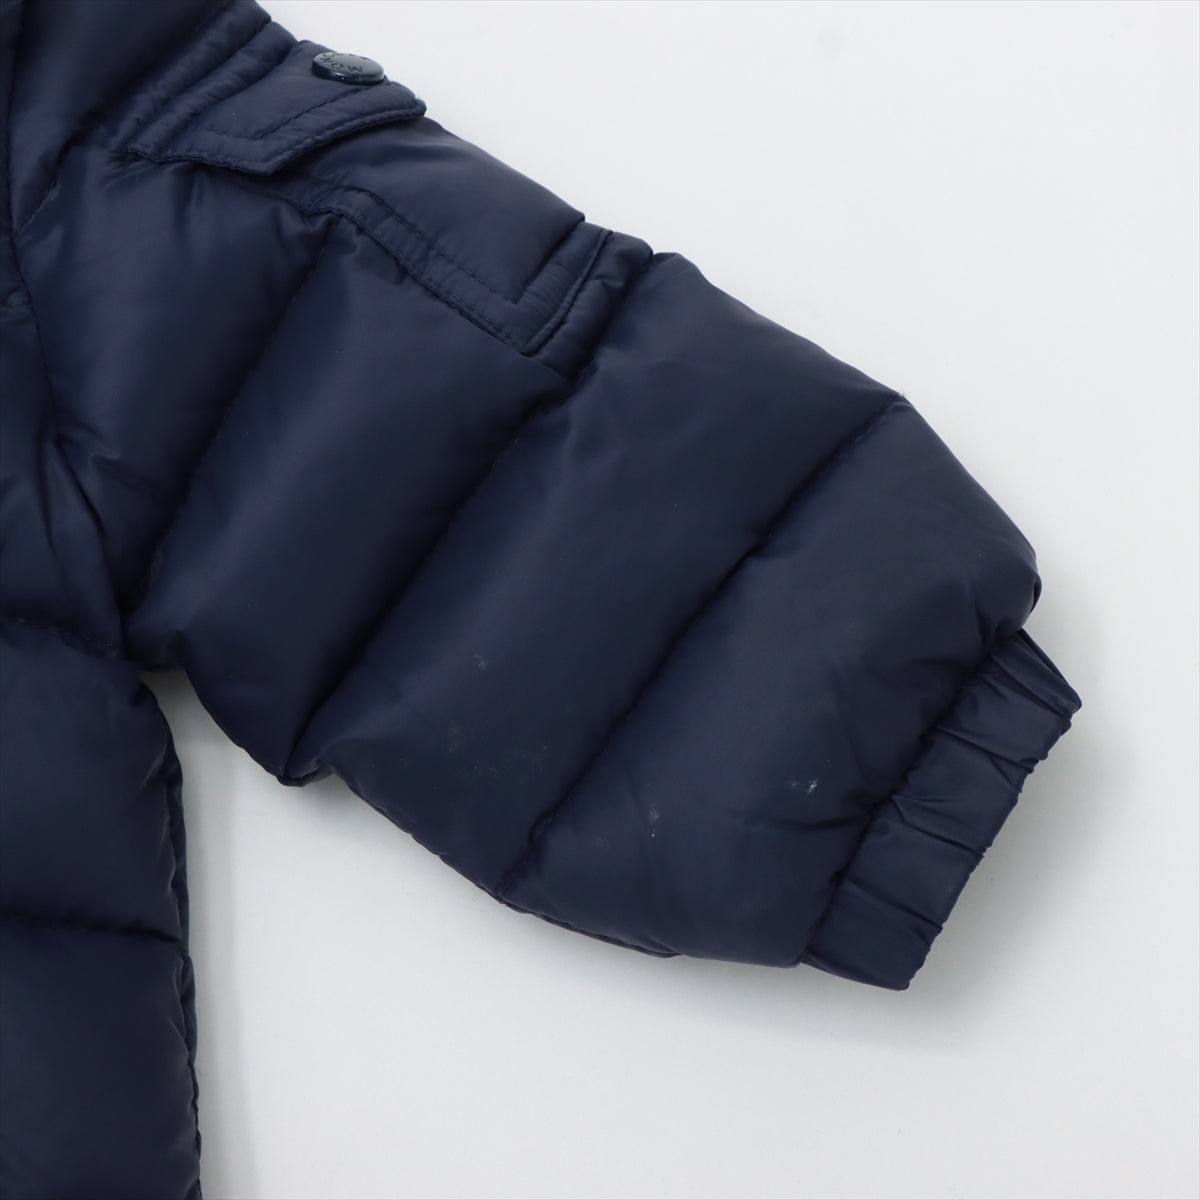 Moncler JULES 17 years Nylon Down jacket 6/9M 68cm Kids Navy blue